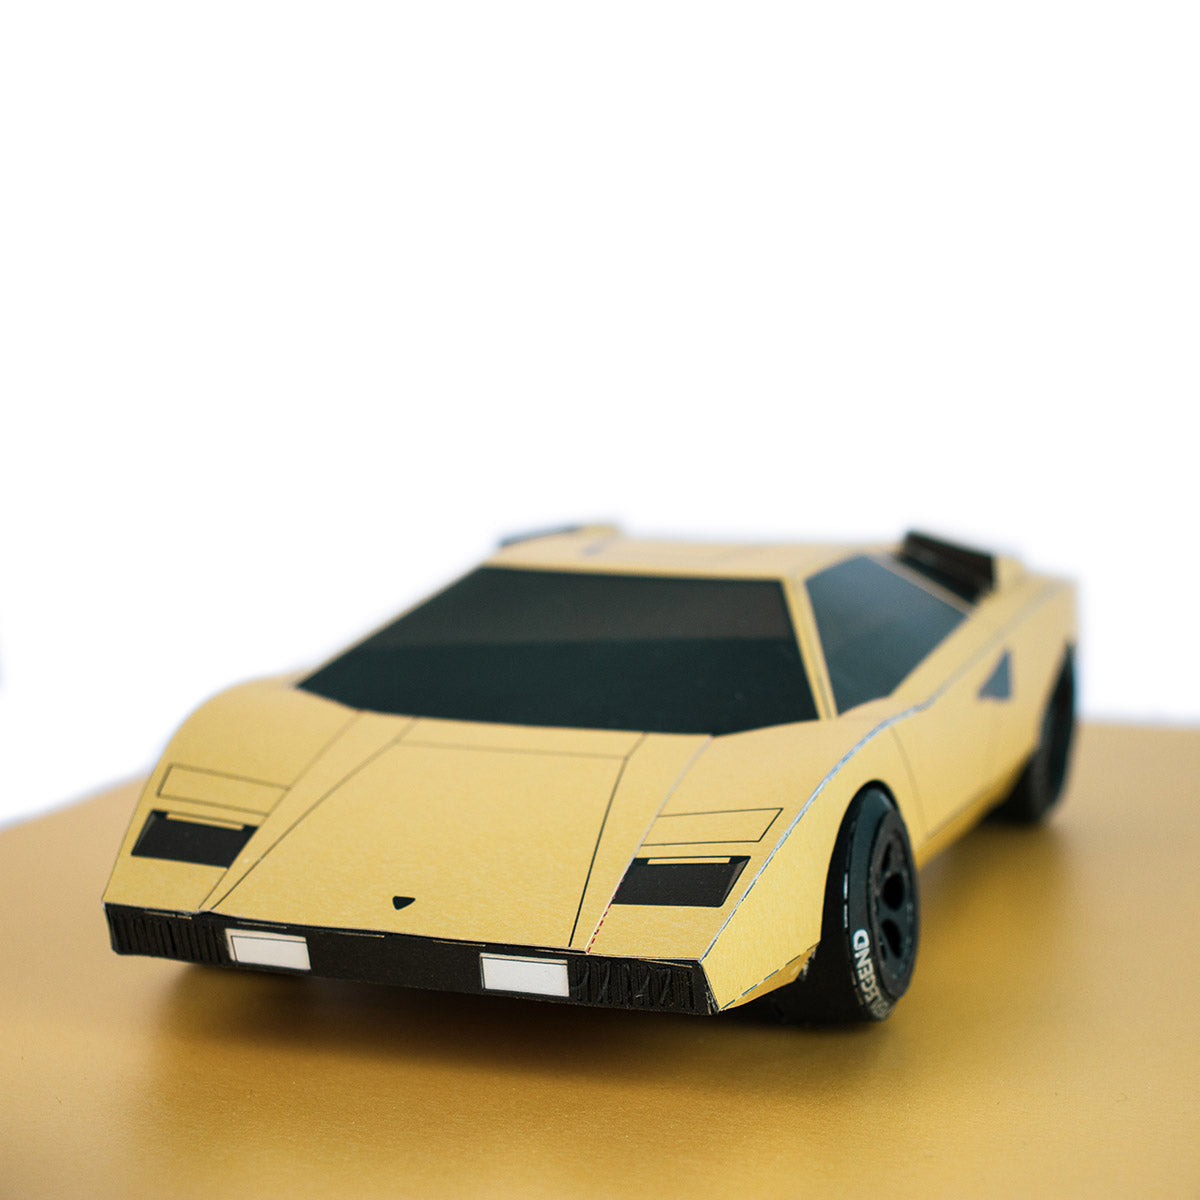 The Coun - 1:18 - Printable Papercraft Car Sculpture Kit - Front View